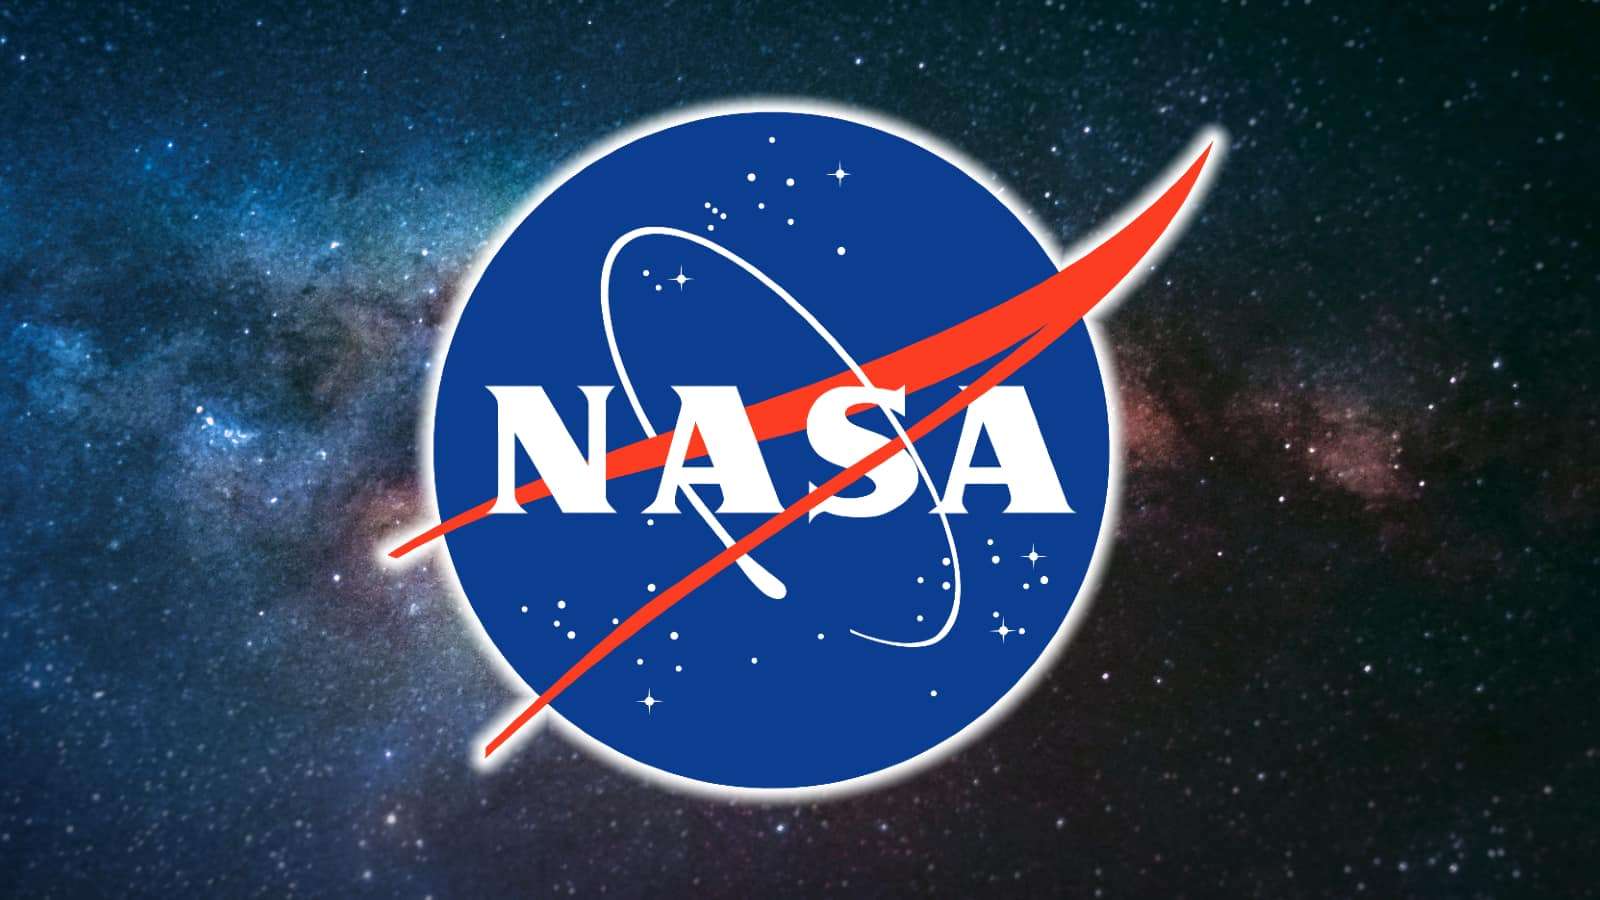 NASA logo in front of a galaxy